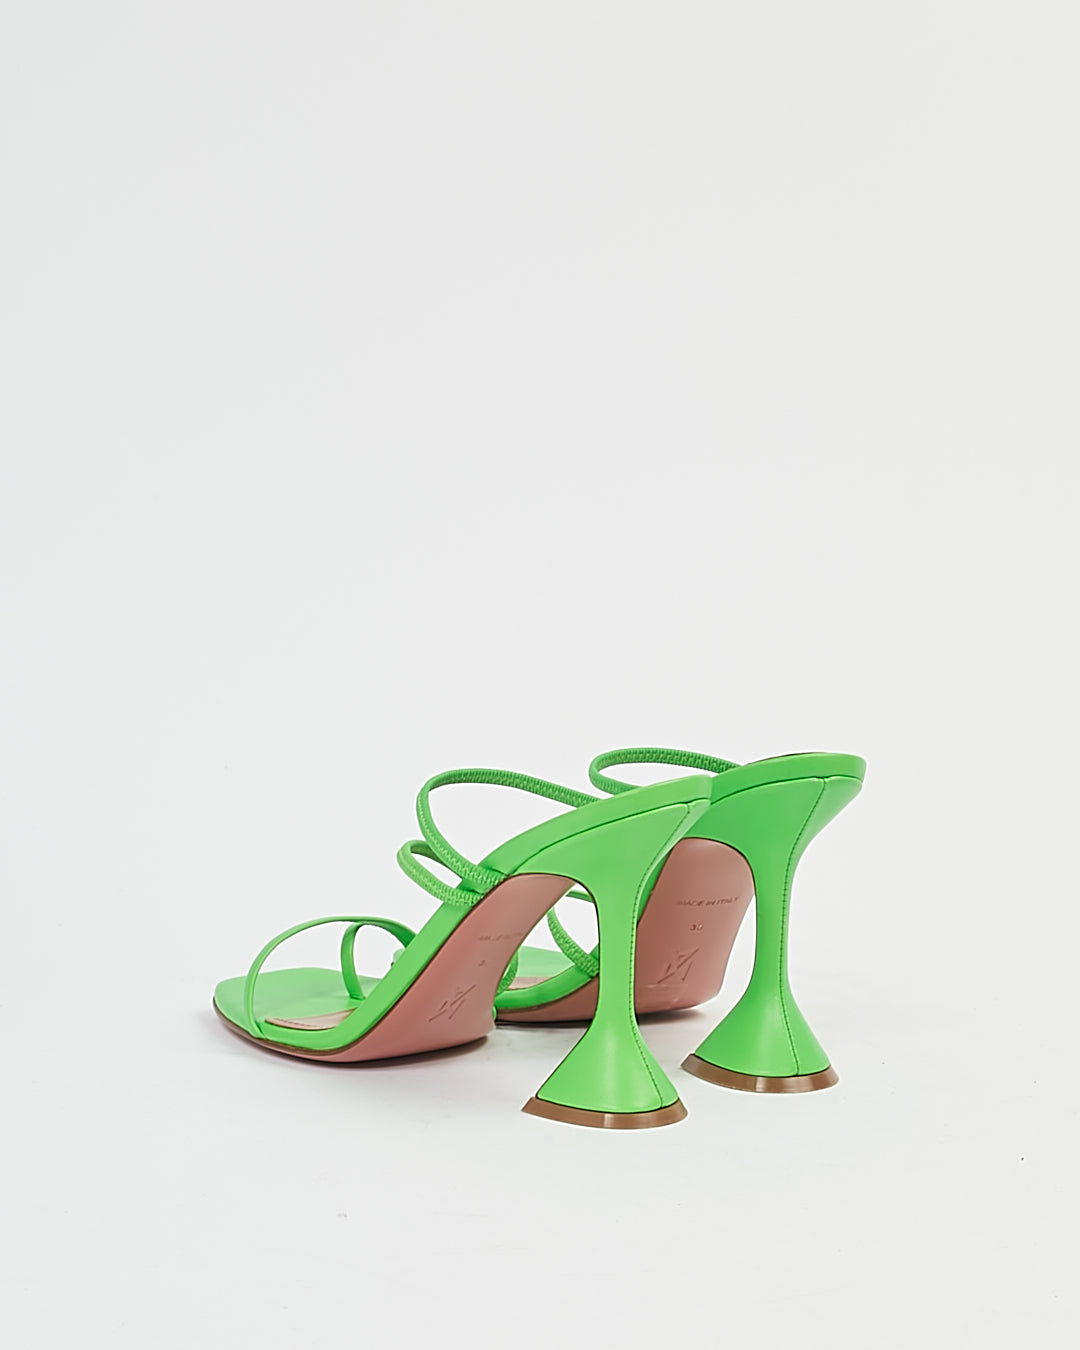 Amina Muaddi Green Leather Naima Sandal Heels - 38